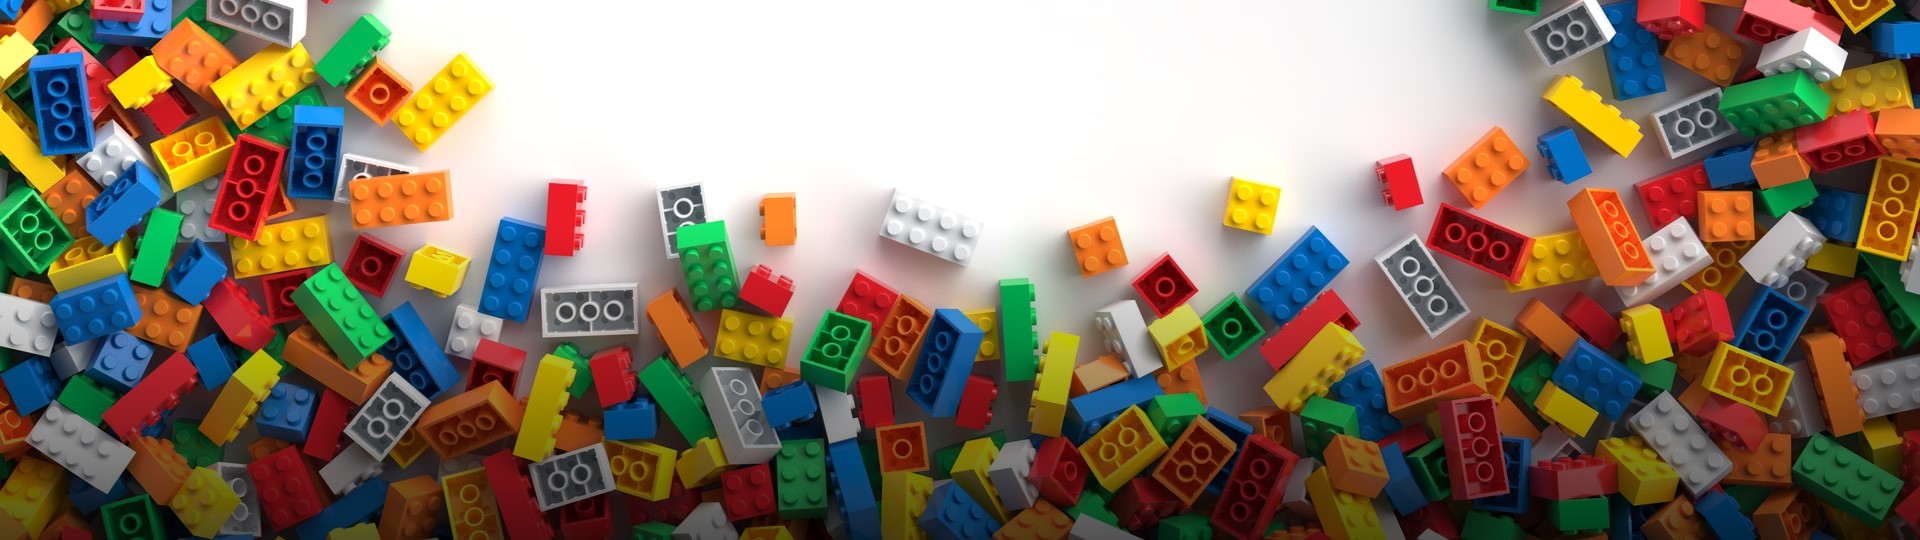 Lego hodlá prodávat stavebnicové kostky z recyklovaných plastových lahví